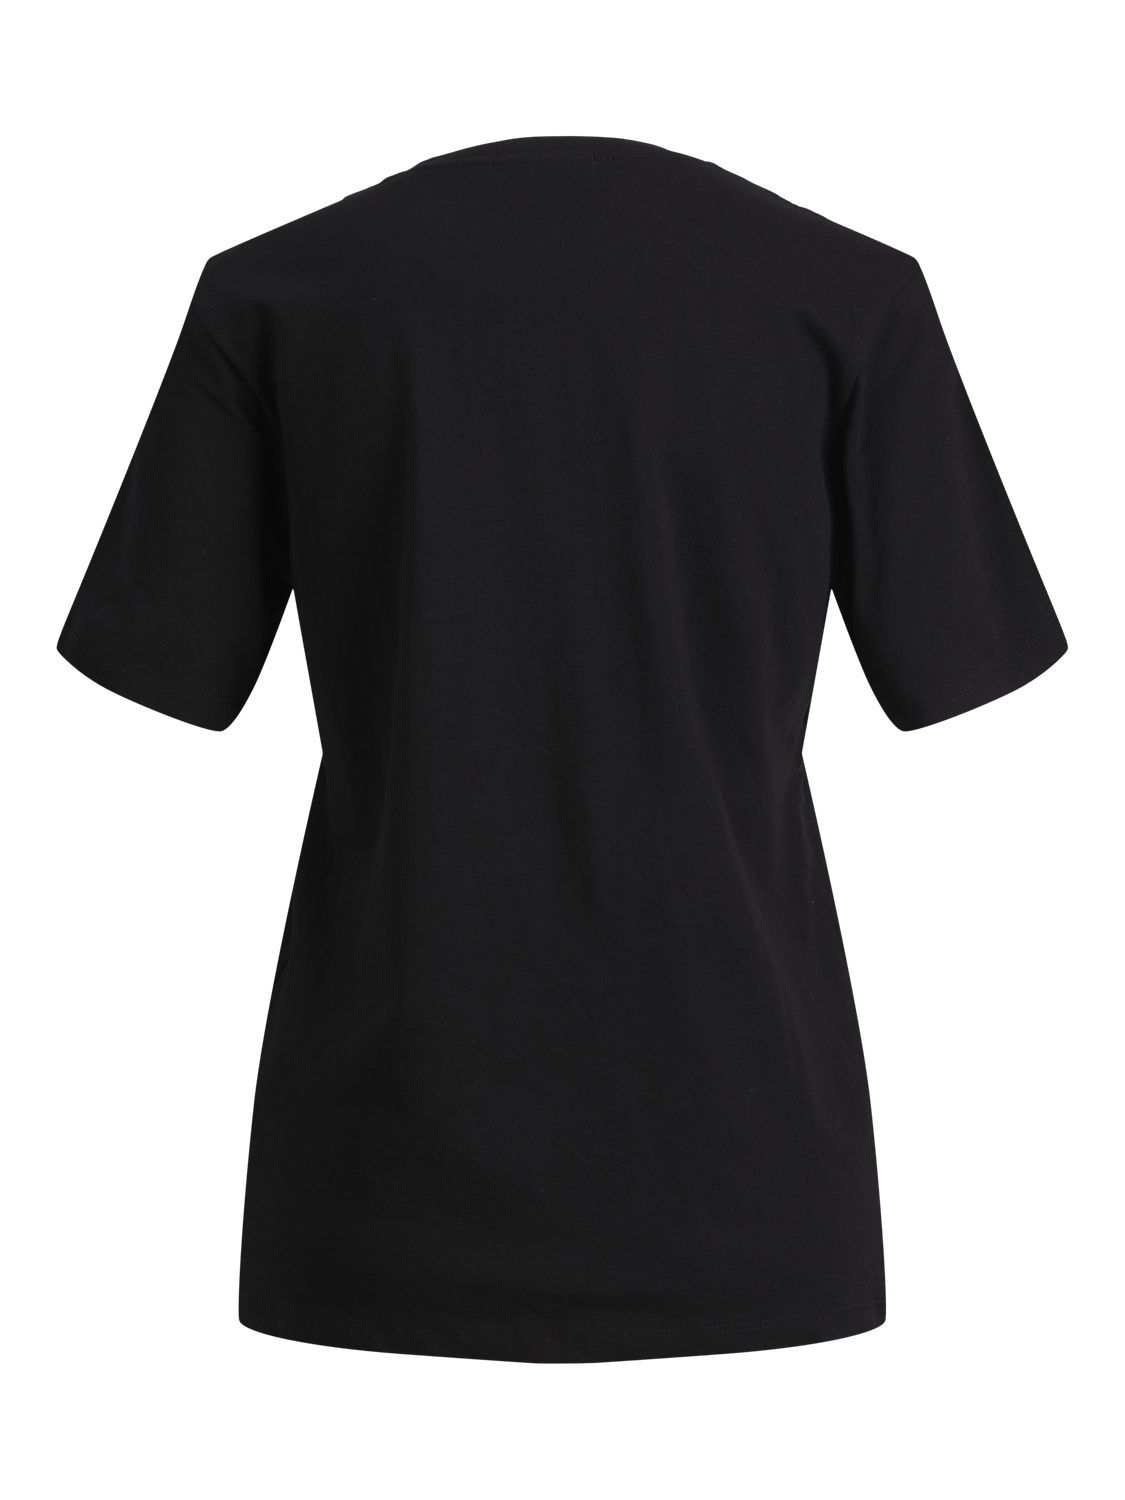 JJXX Καλοκαιρινό μπλουζάκι -Black - 12200182